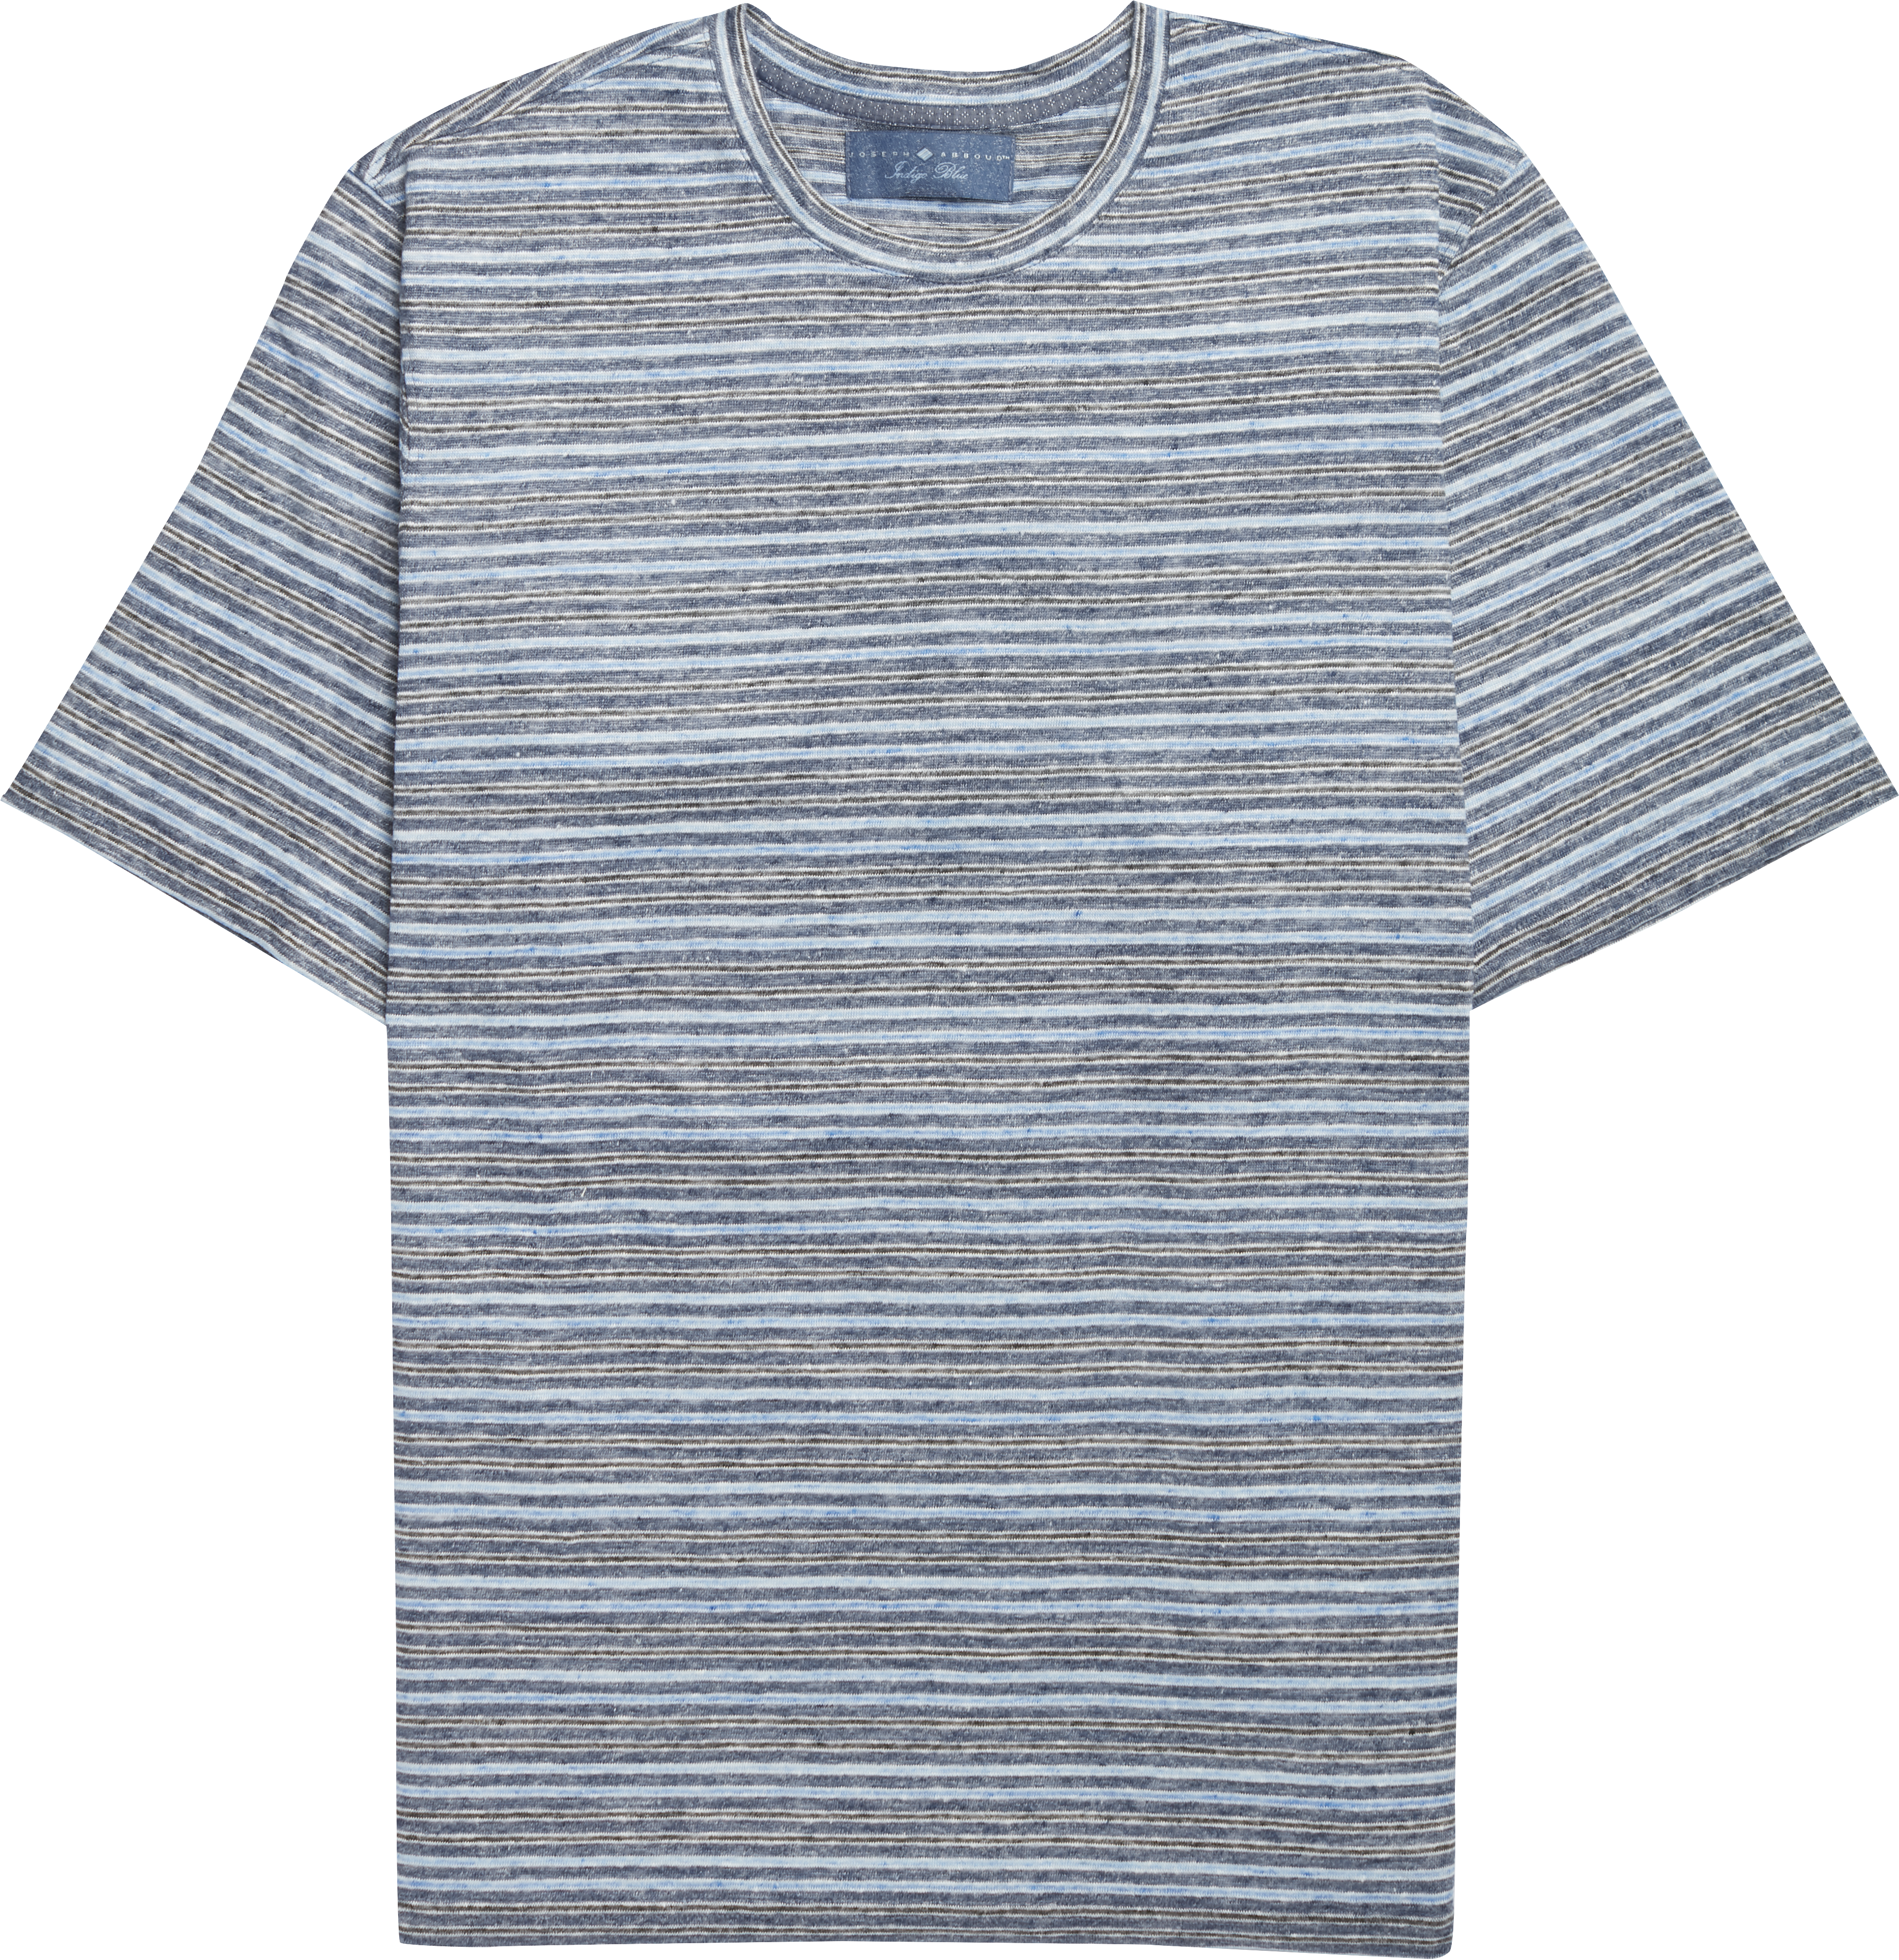 Joseph Abboud Indigo Blue Crew Neck Shirt, Navy Stripe - Men's Sale ...